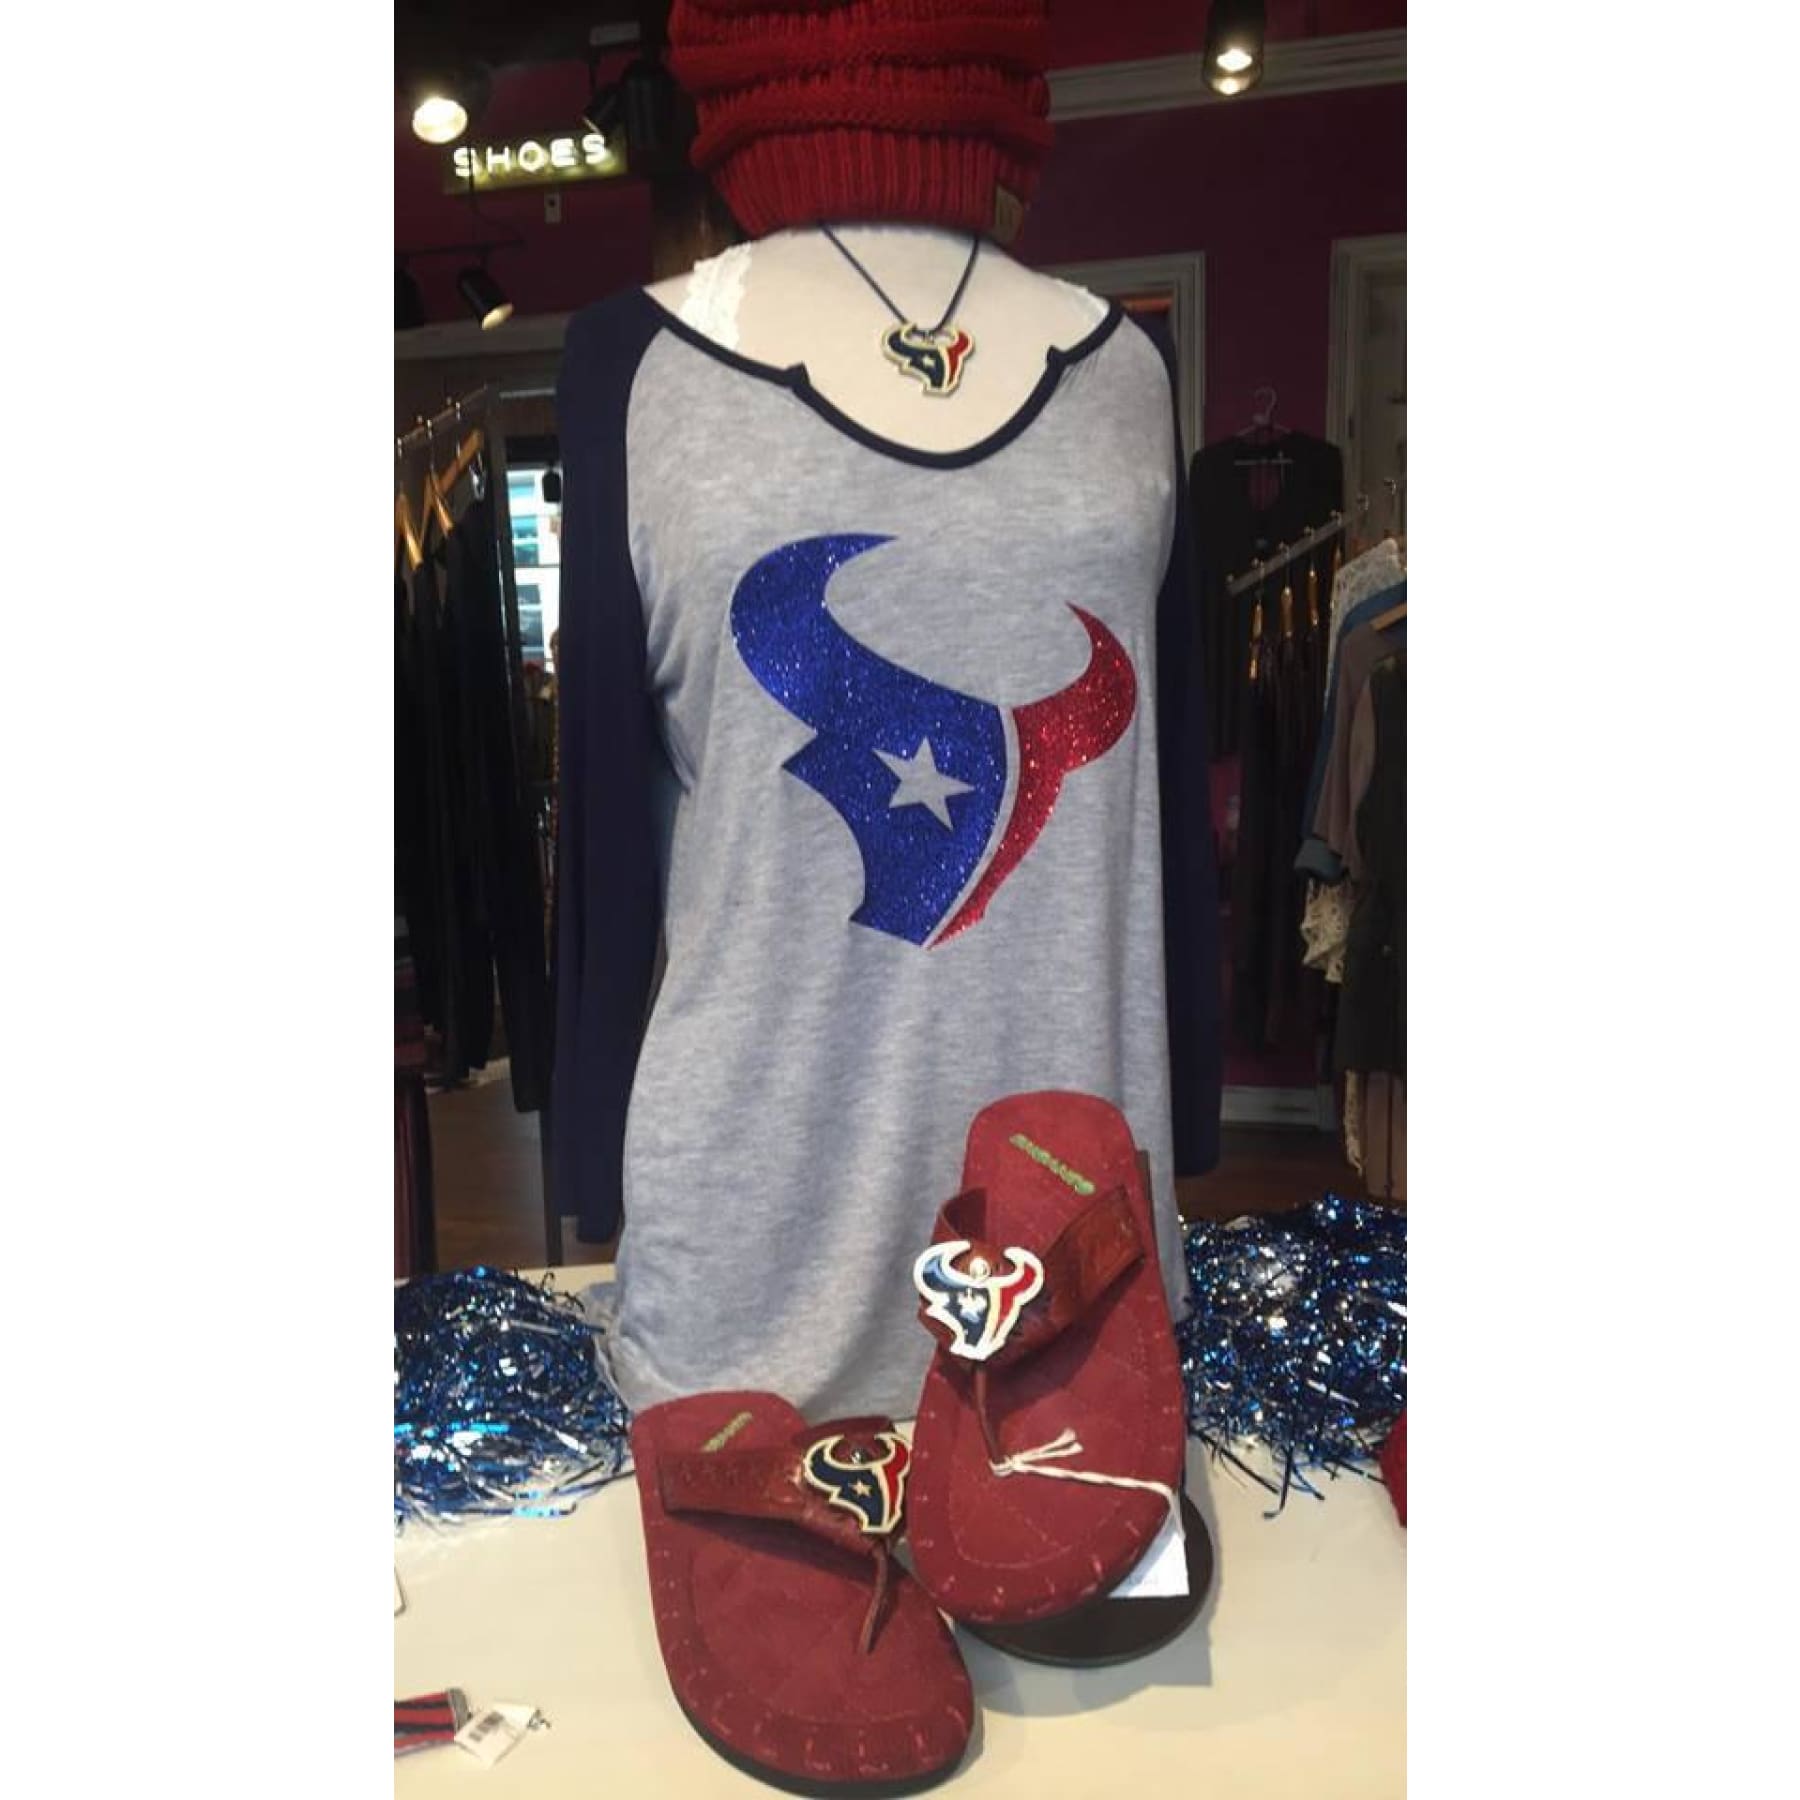 Texans Inspired Raglan Tee - Glitter Bull,Team Spirit - Dirt Road Divas Boutique